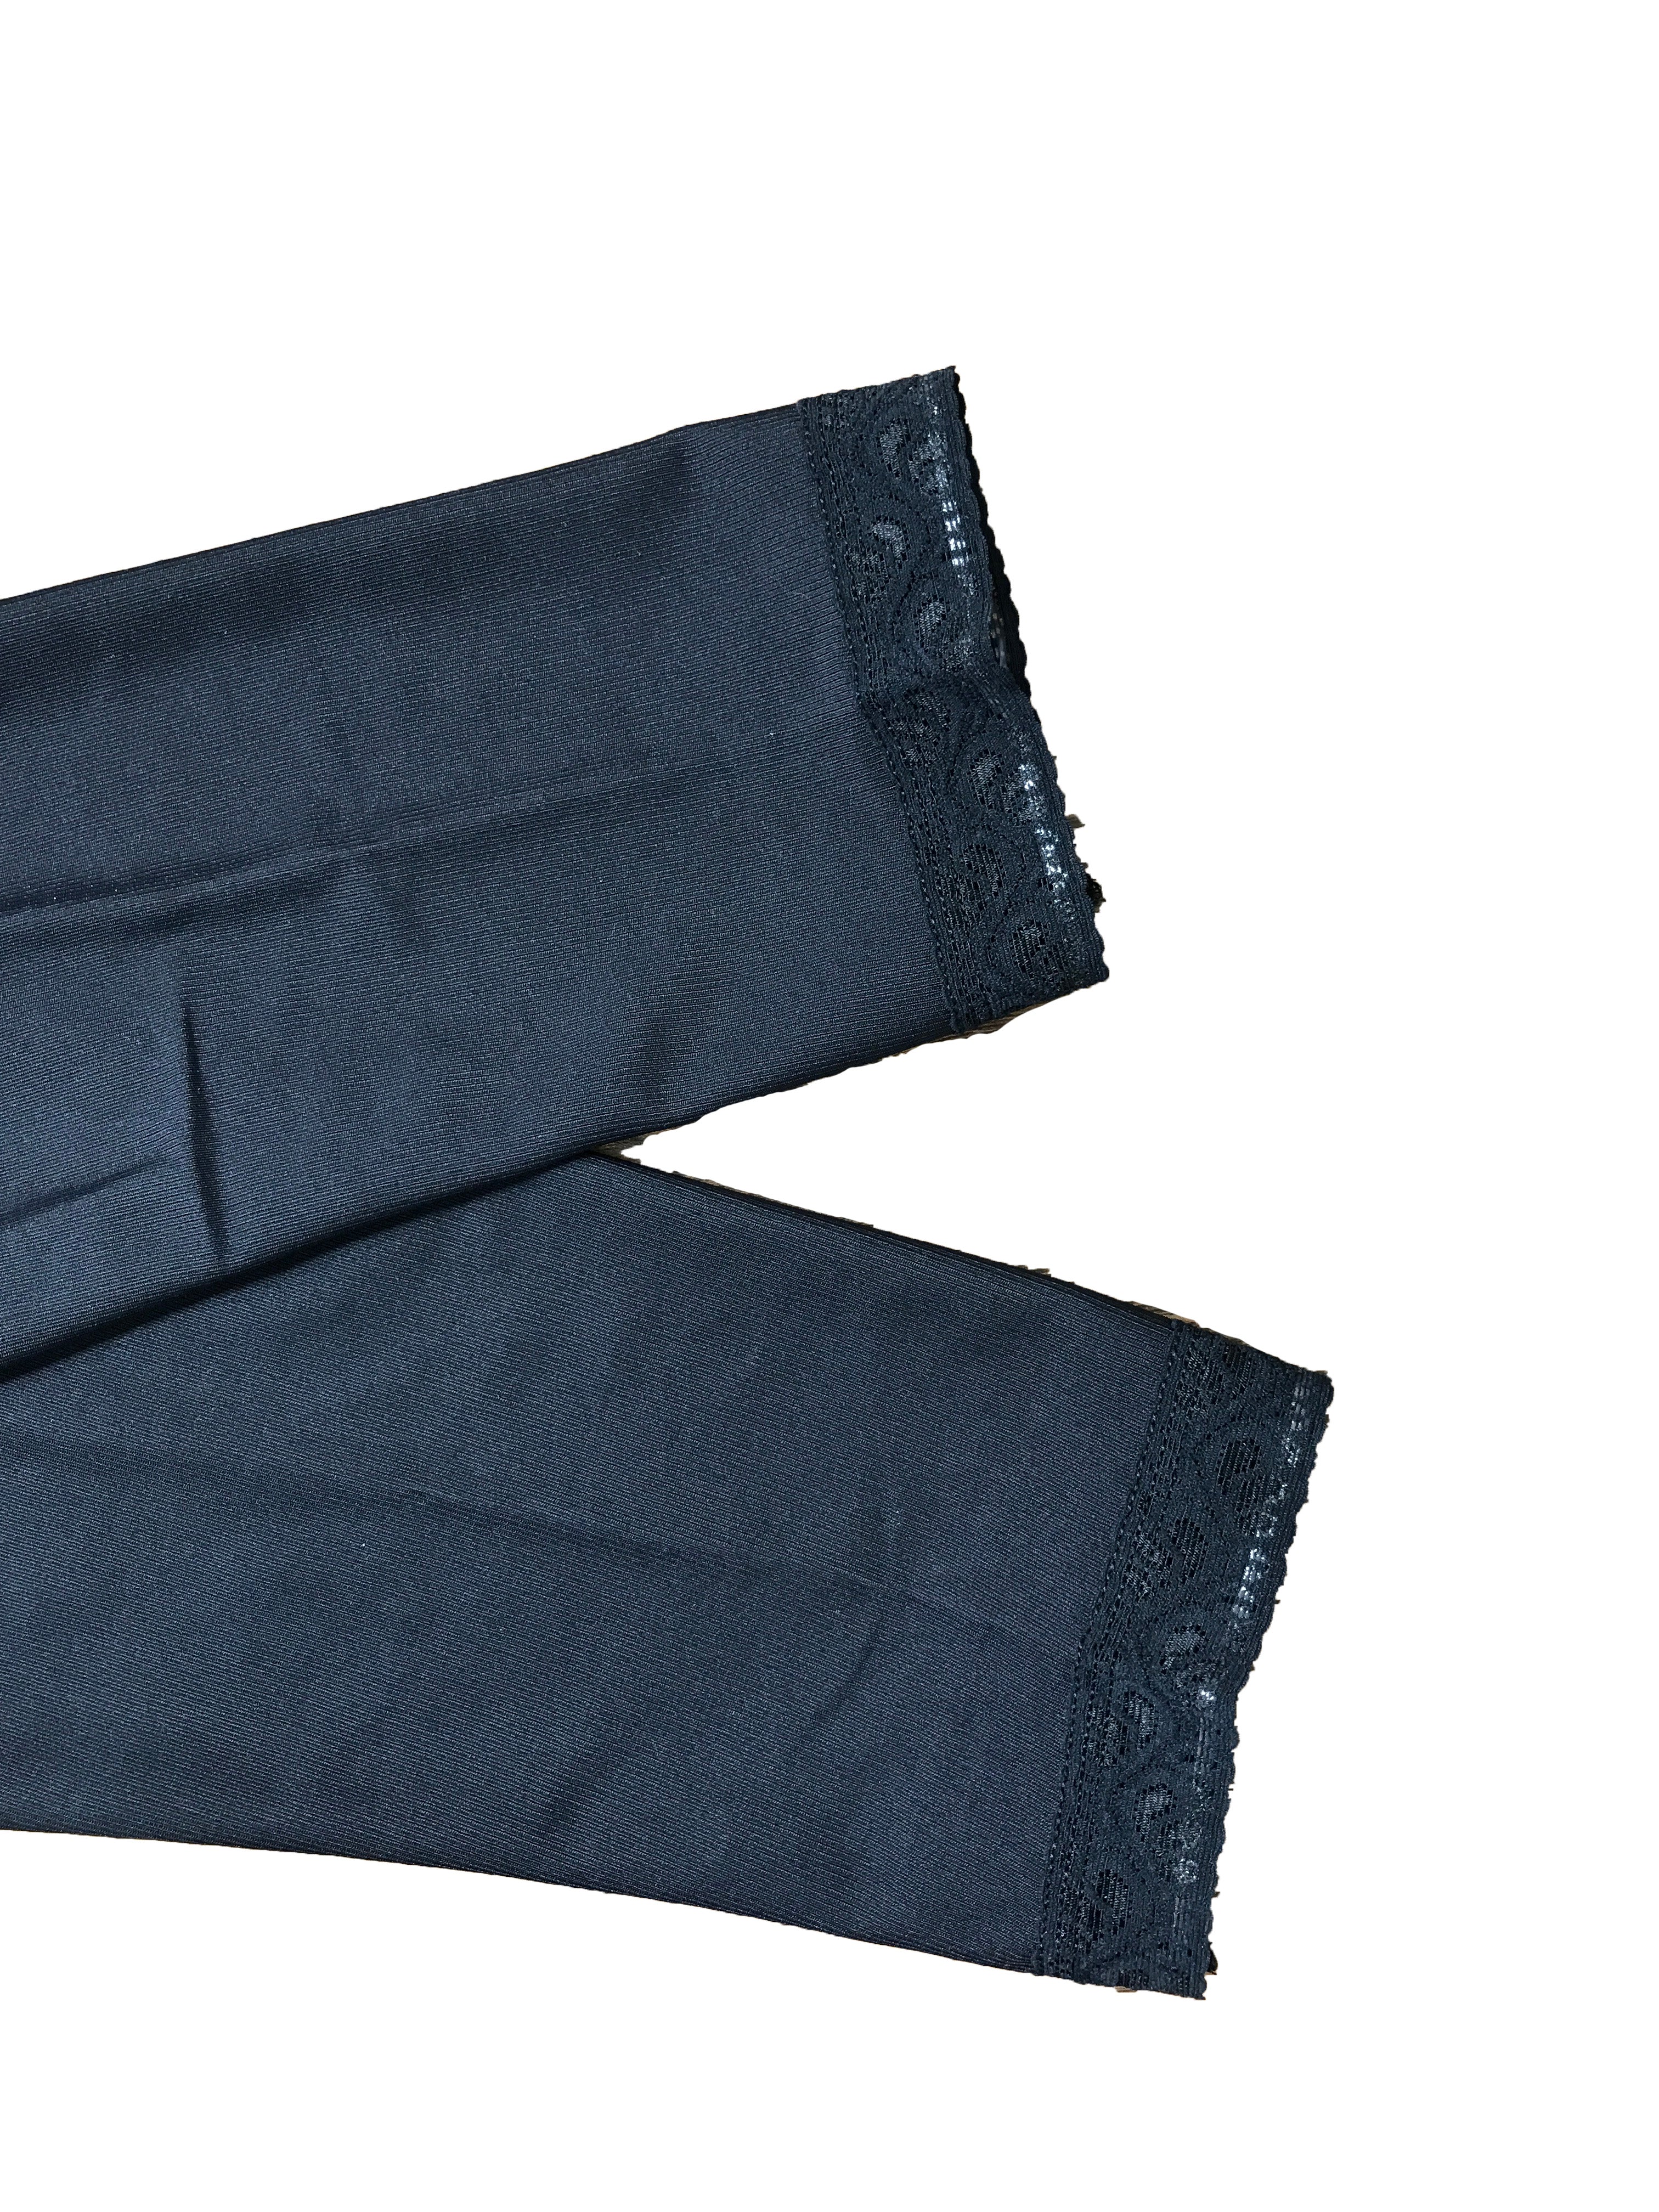 Marena ComfortWear Compression and Support Garment Black Bodysuit Men's  Size XL